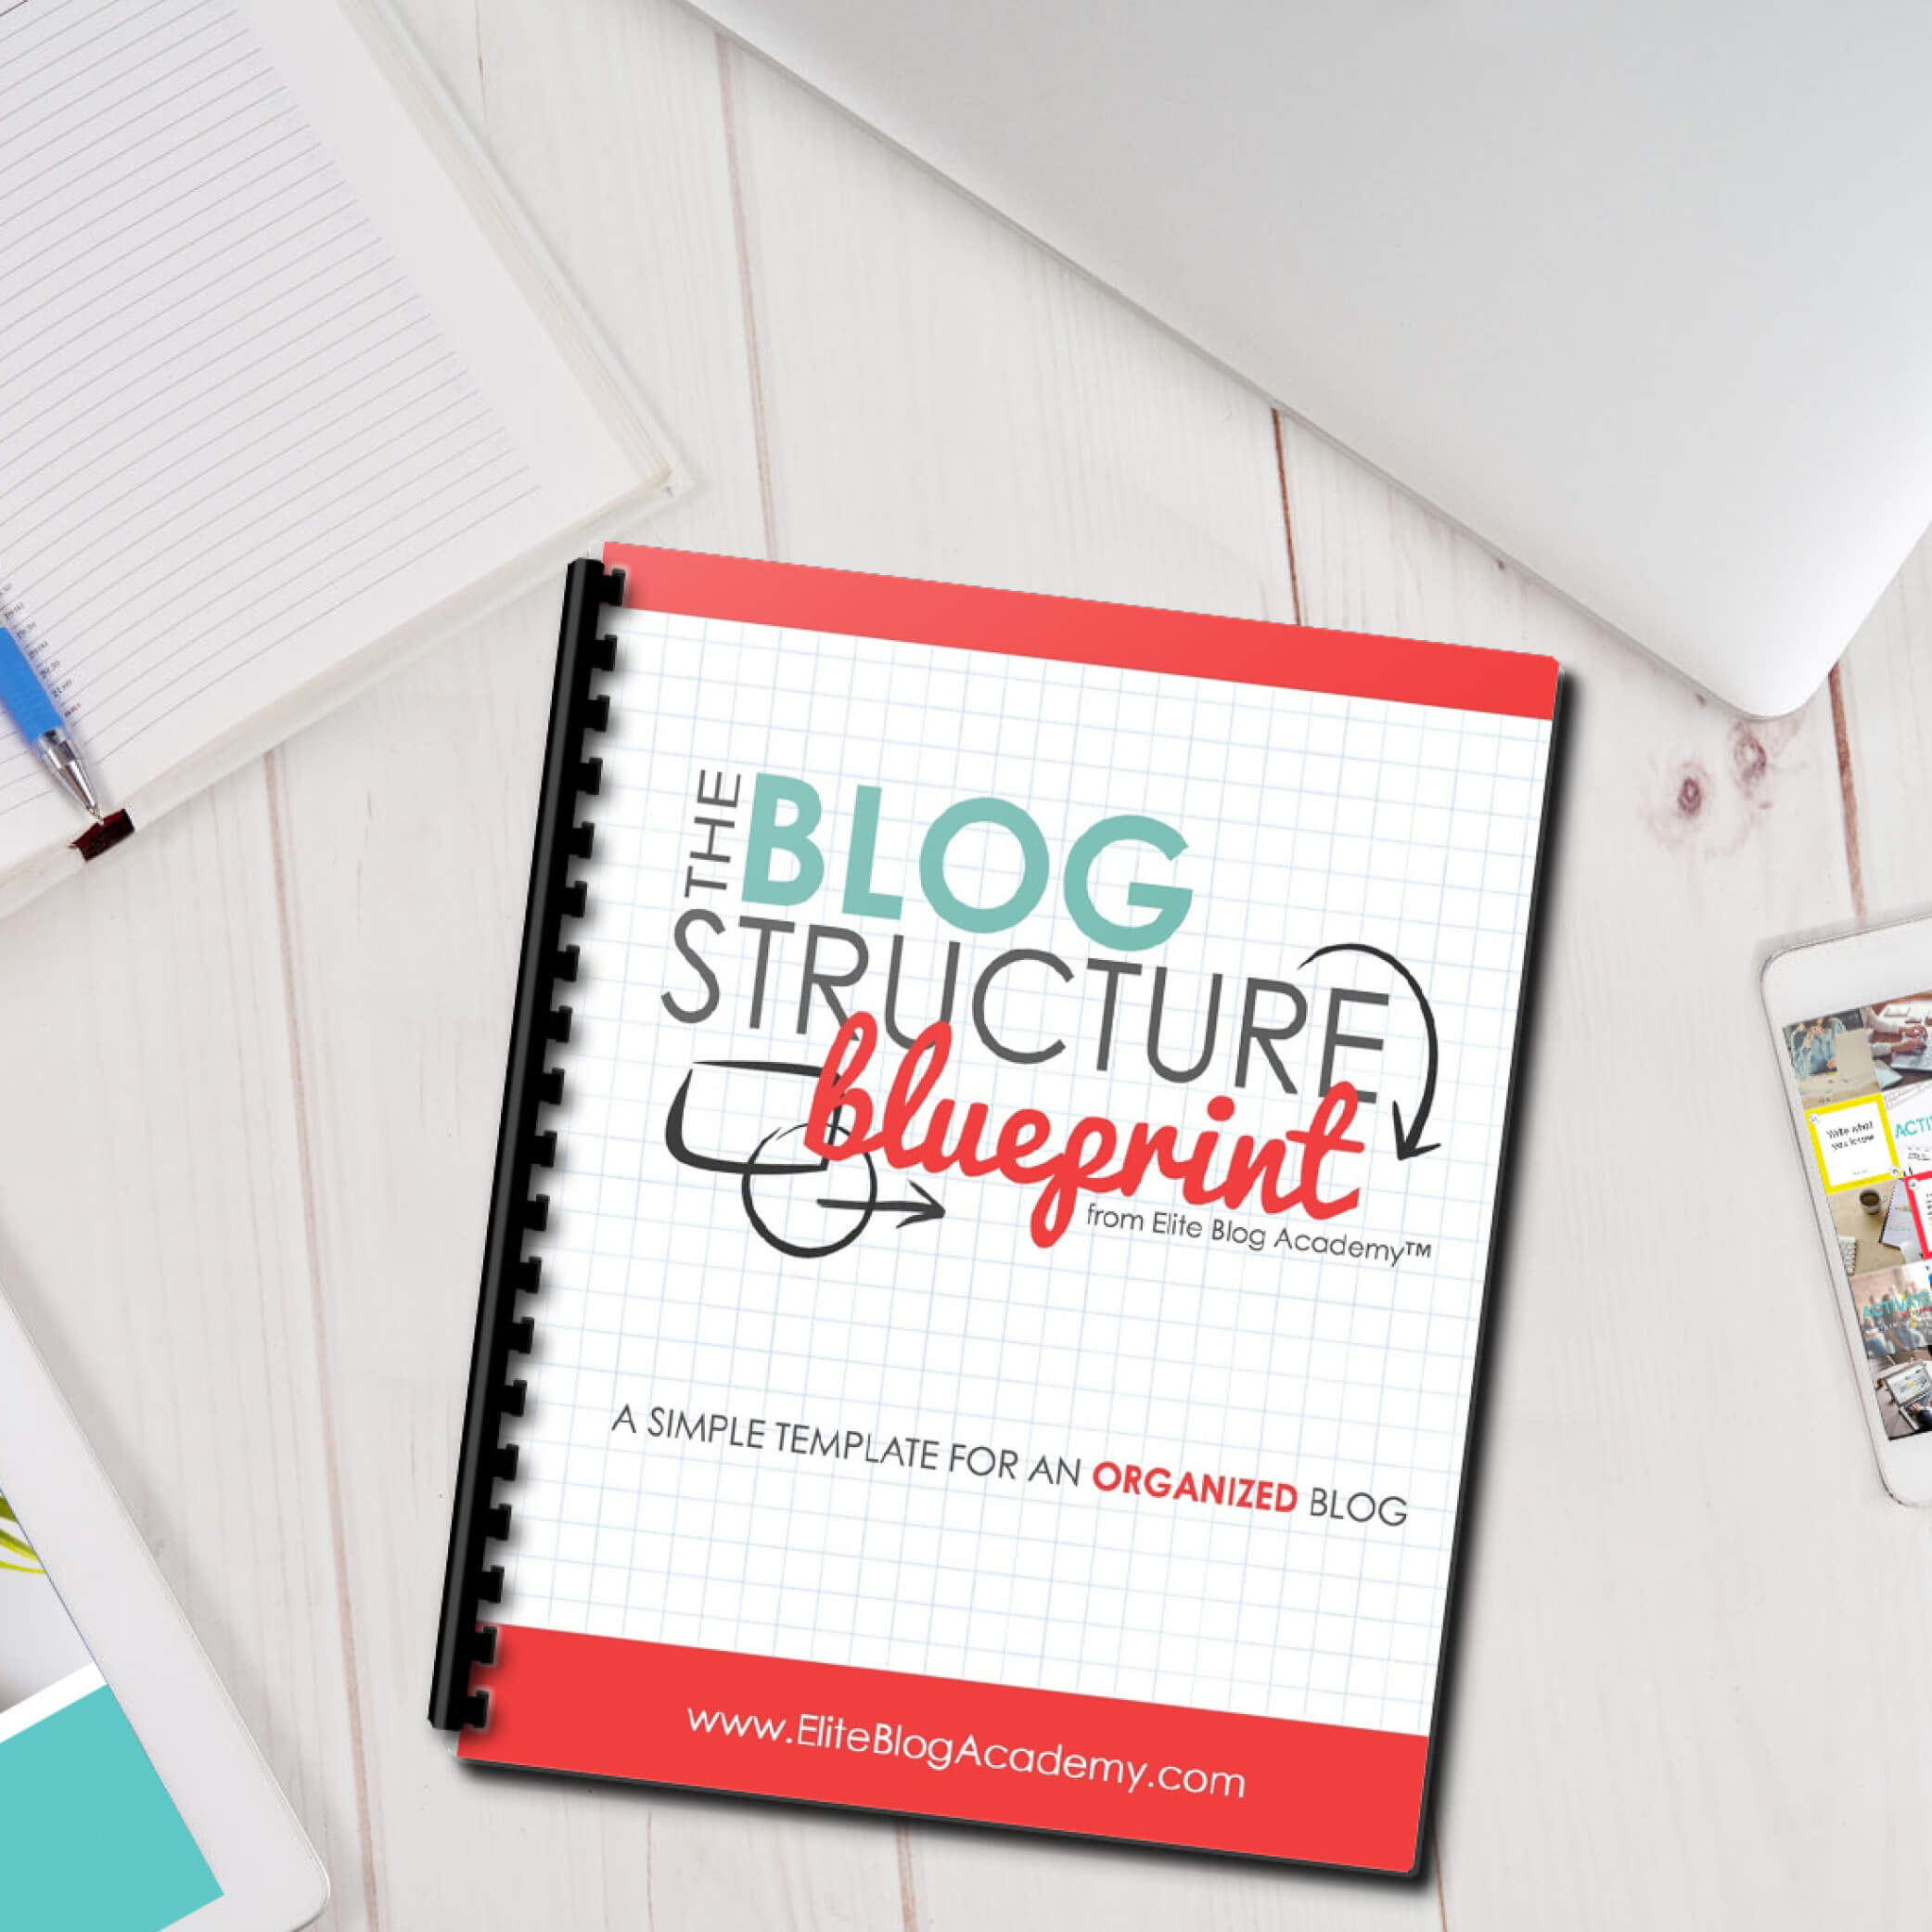 The Blog Structure Blueprint